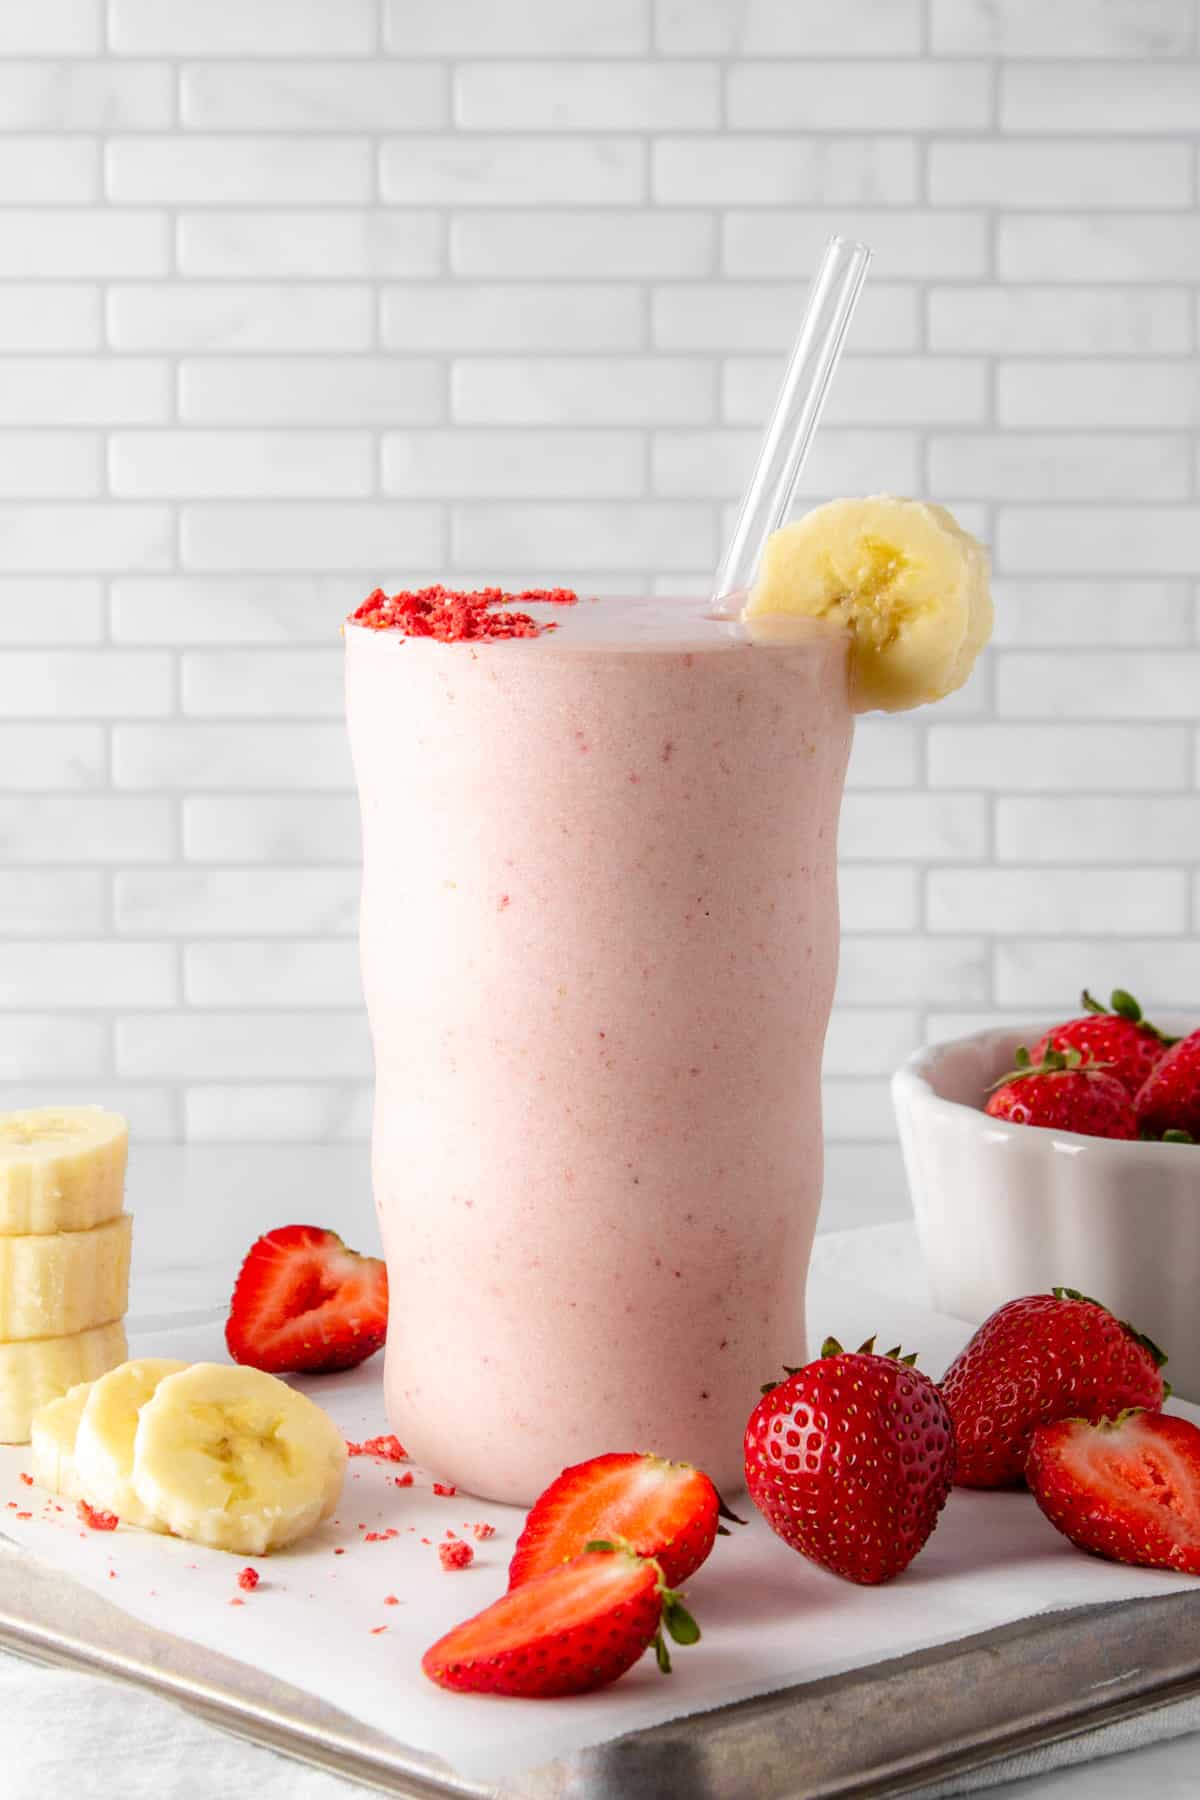 strawberry banana protein shake with fresh strawberries and sliced banana